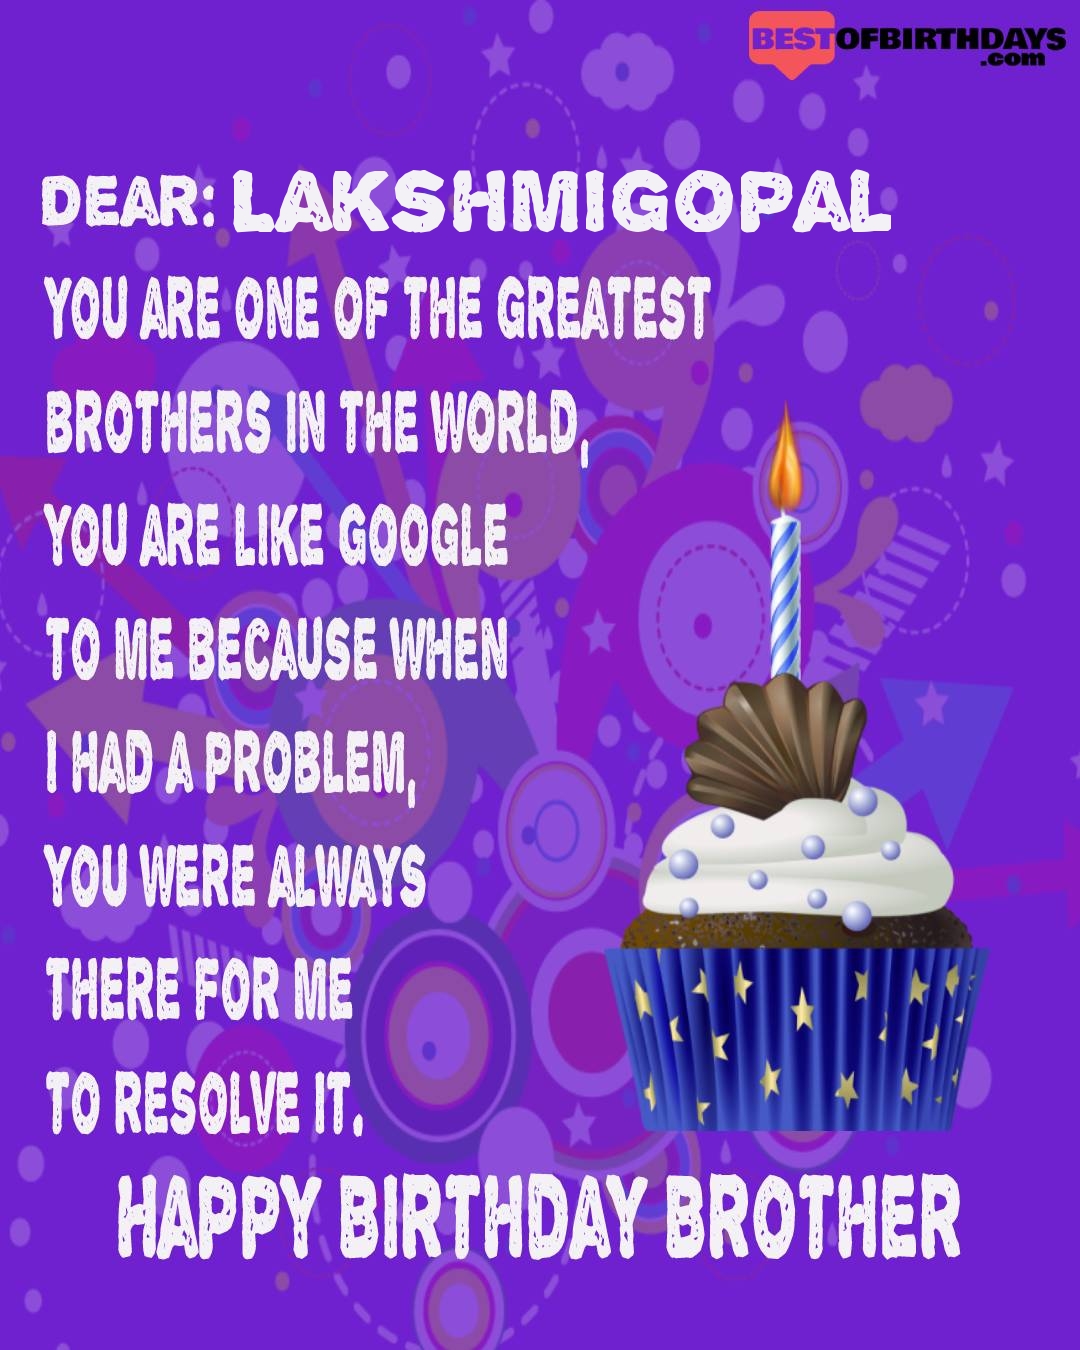 Happy birthday lakshmigopal bhai brother bro